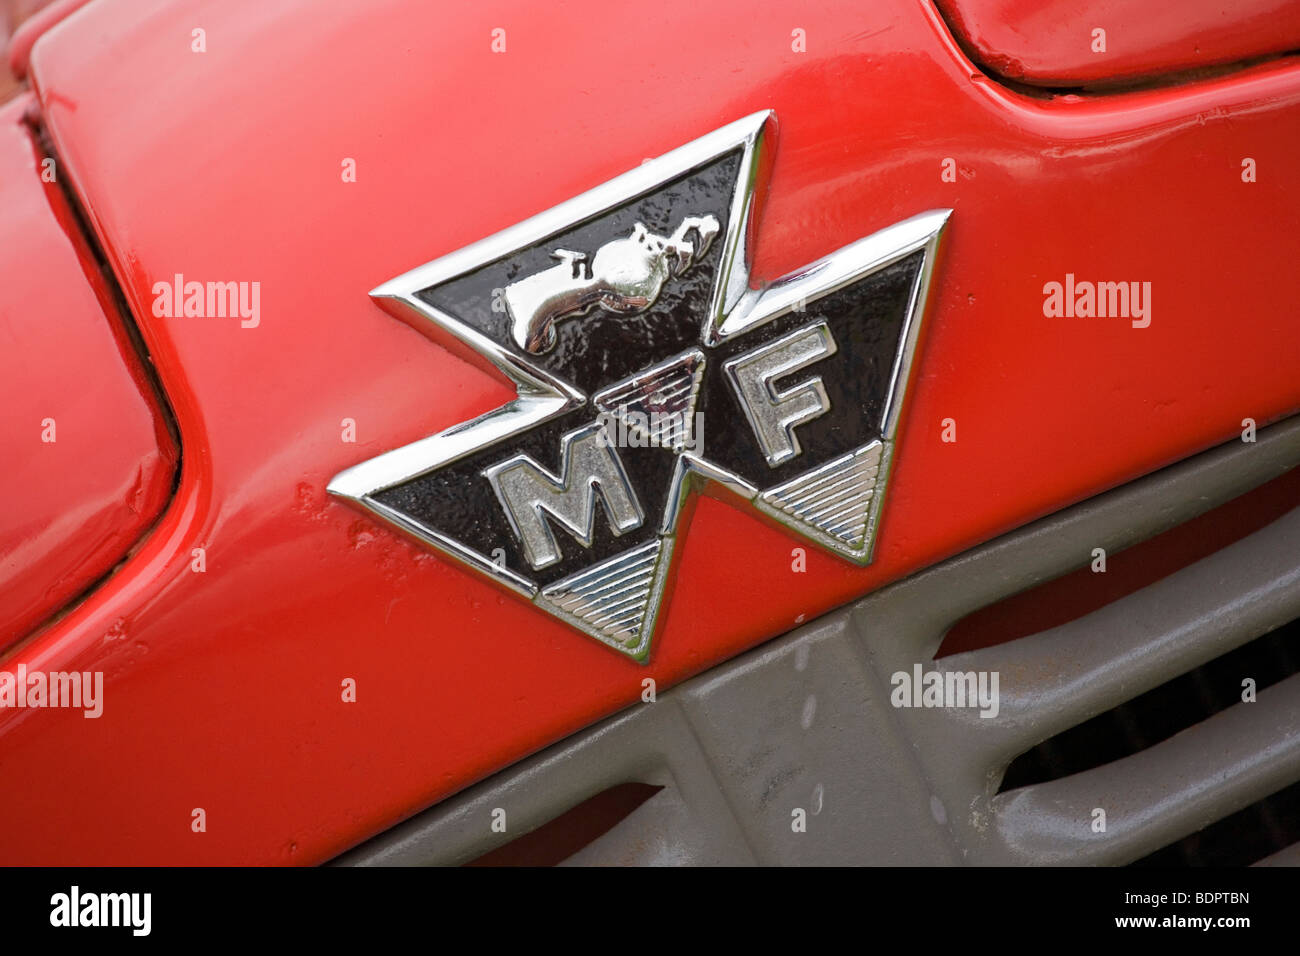 Massey Ferguson tractor badge Stock Photo